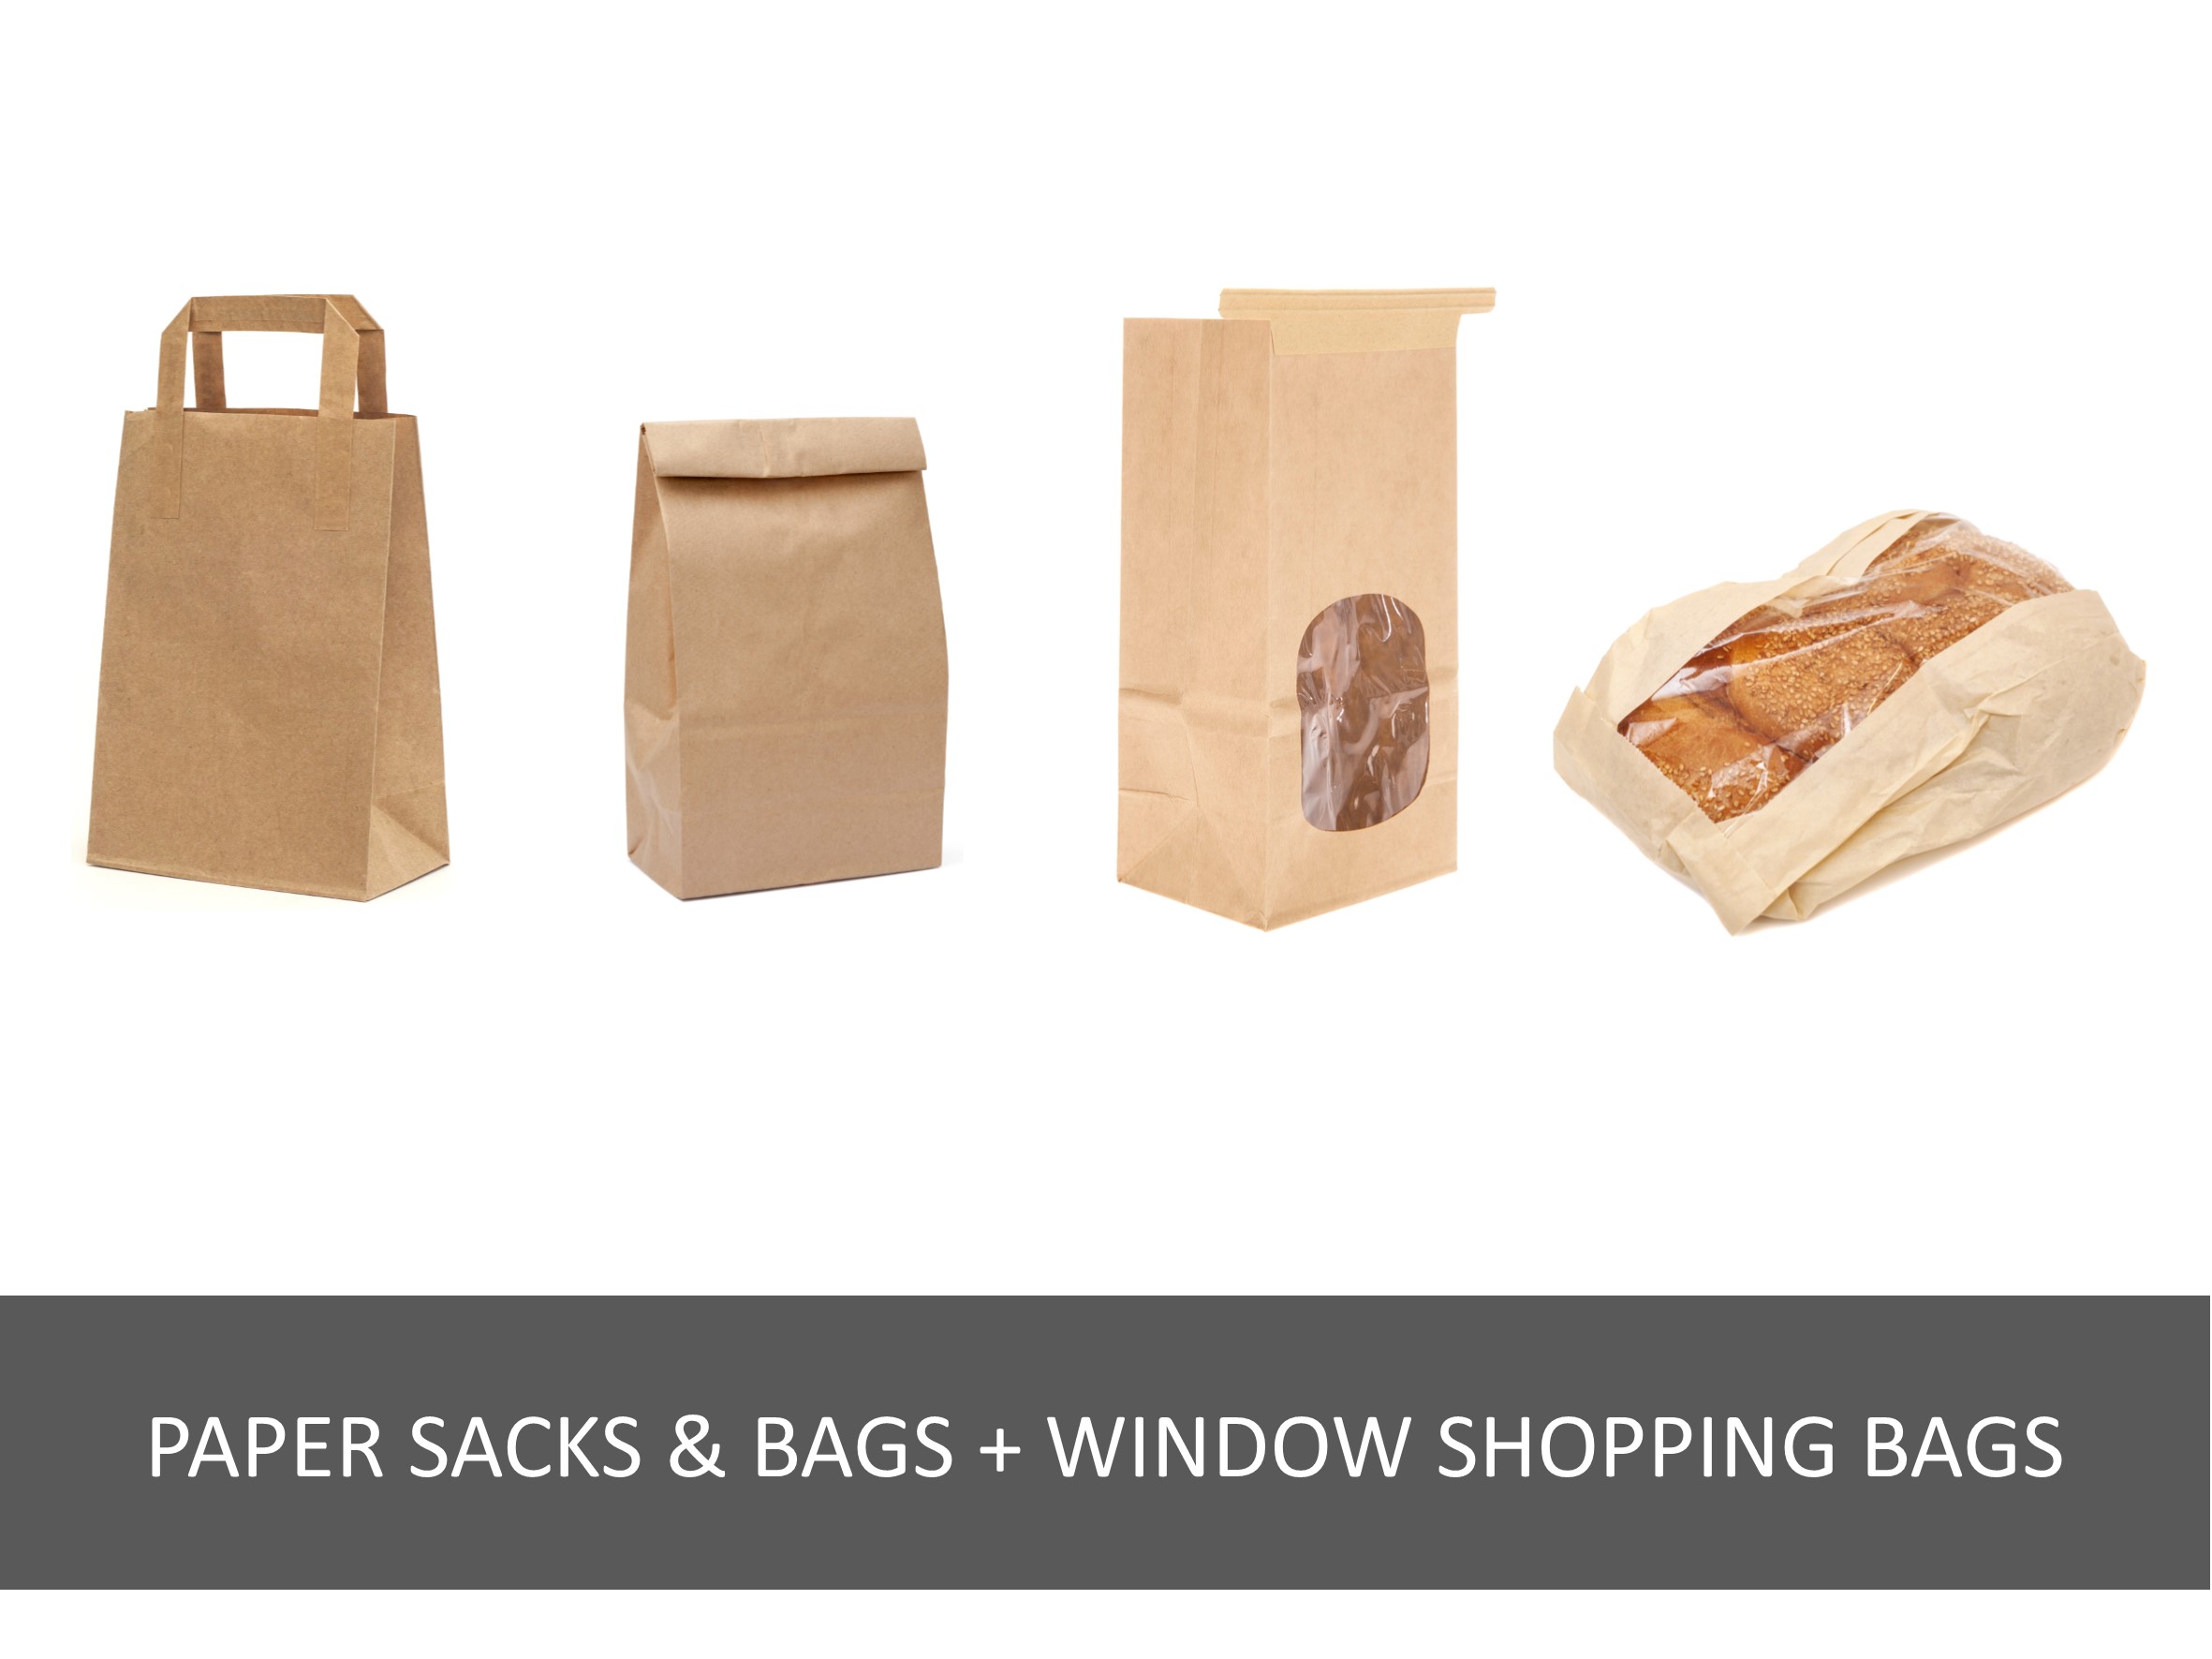 Paper sacks & bags + window shopping bags